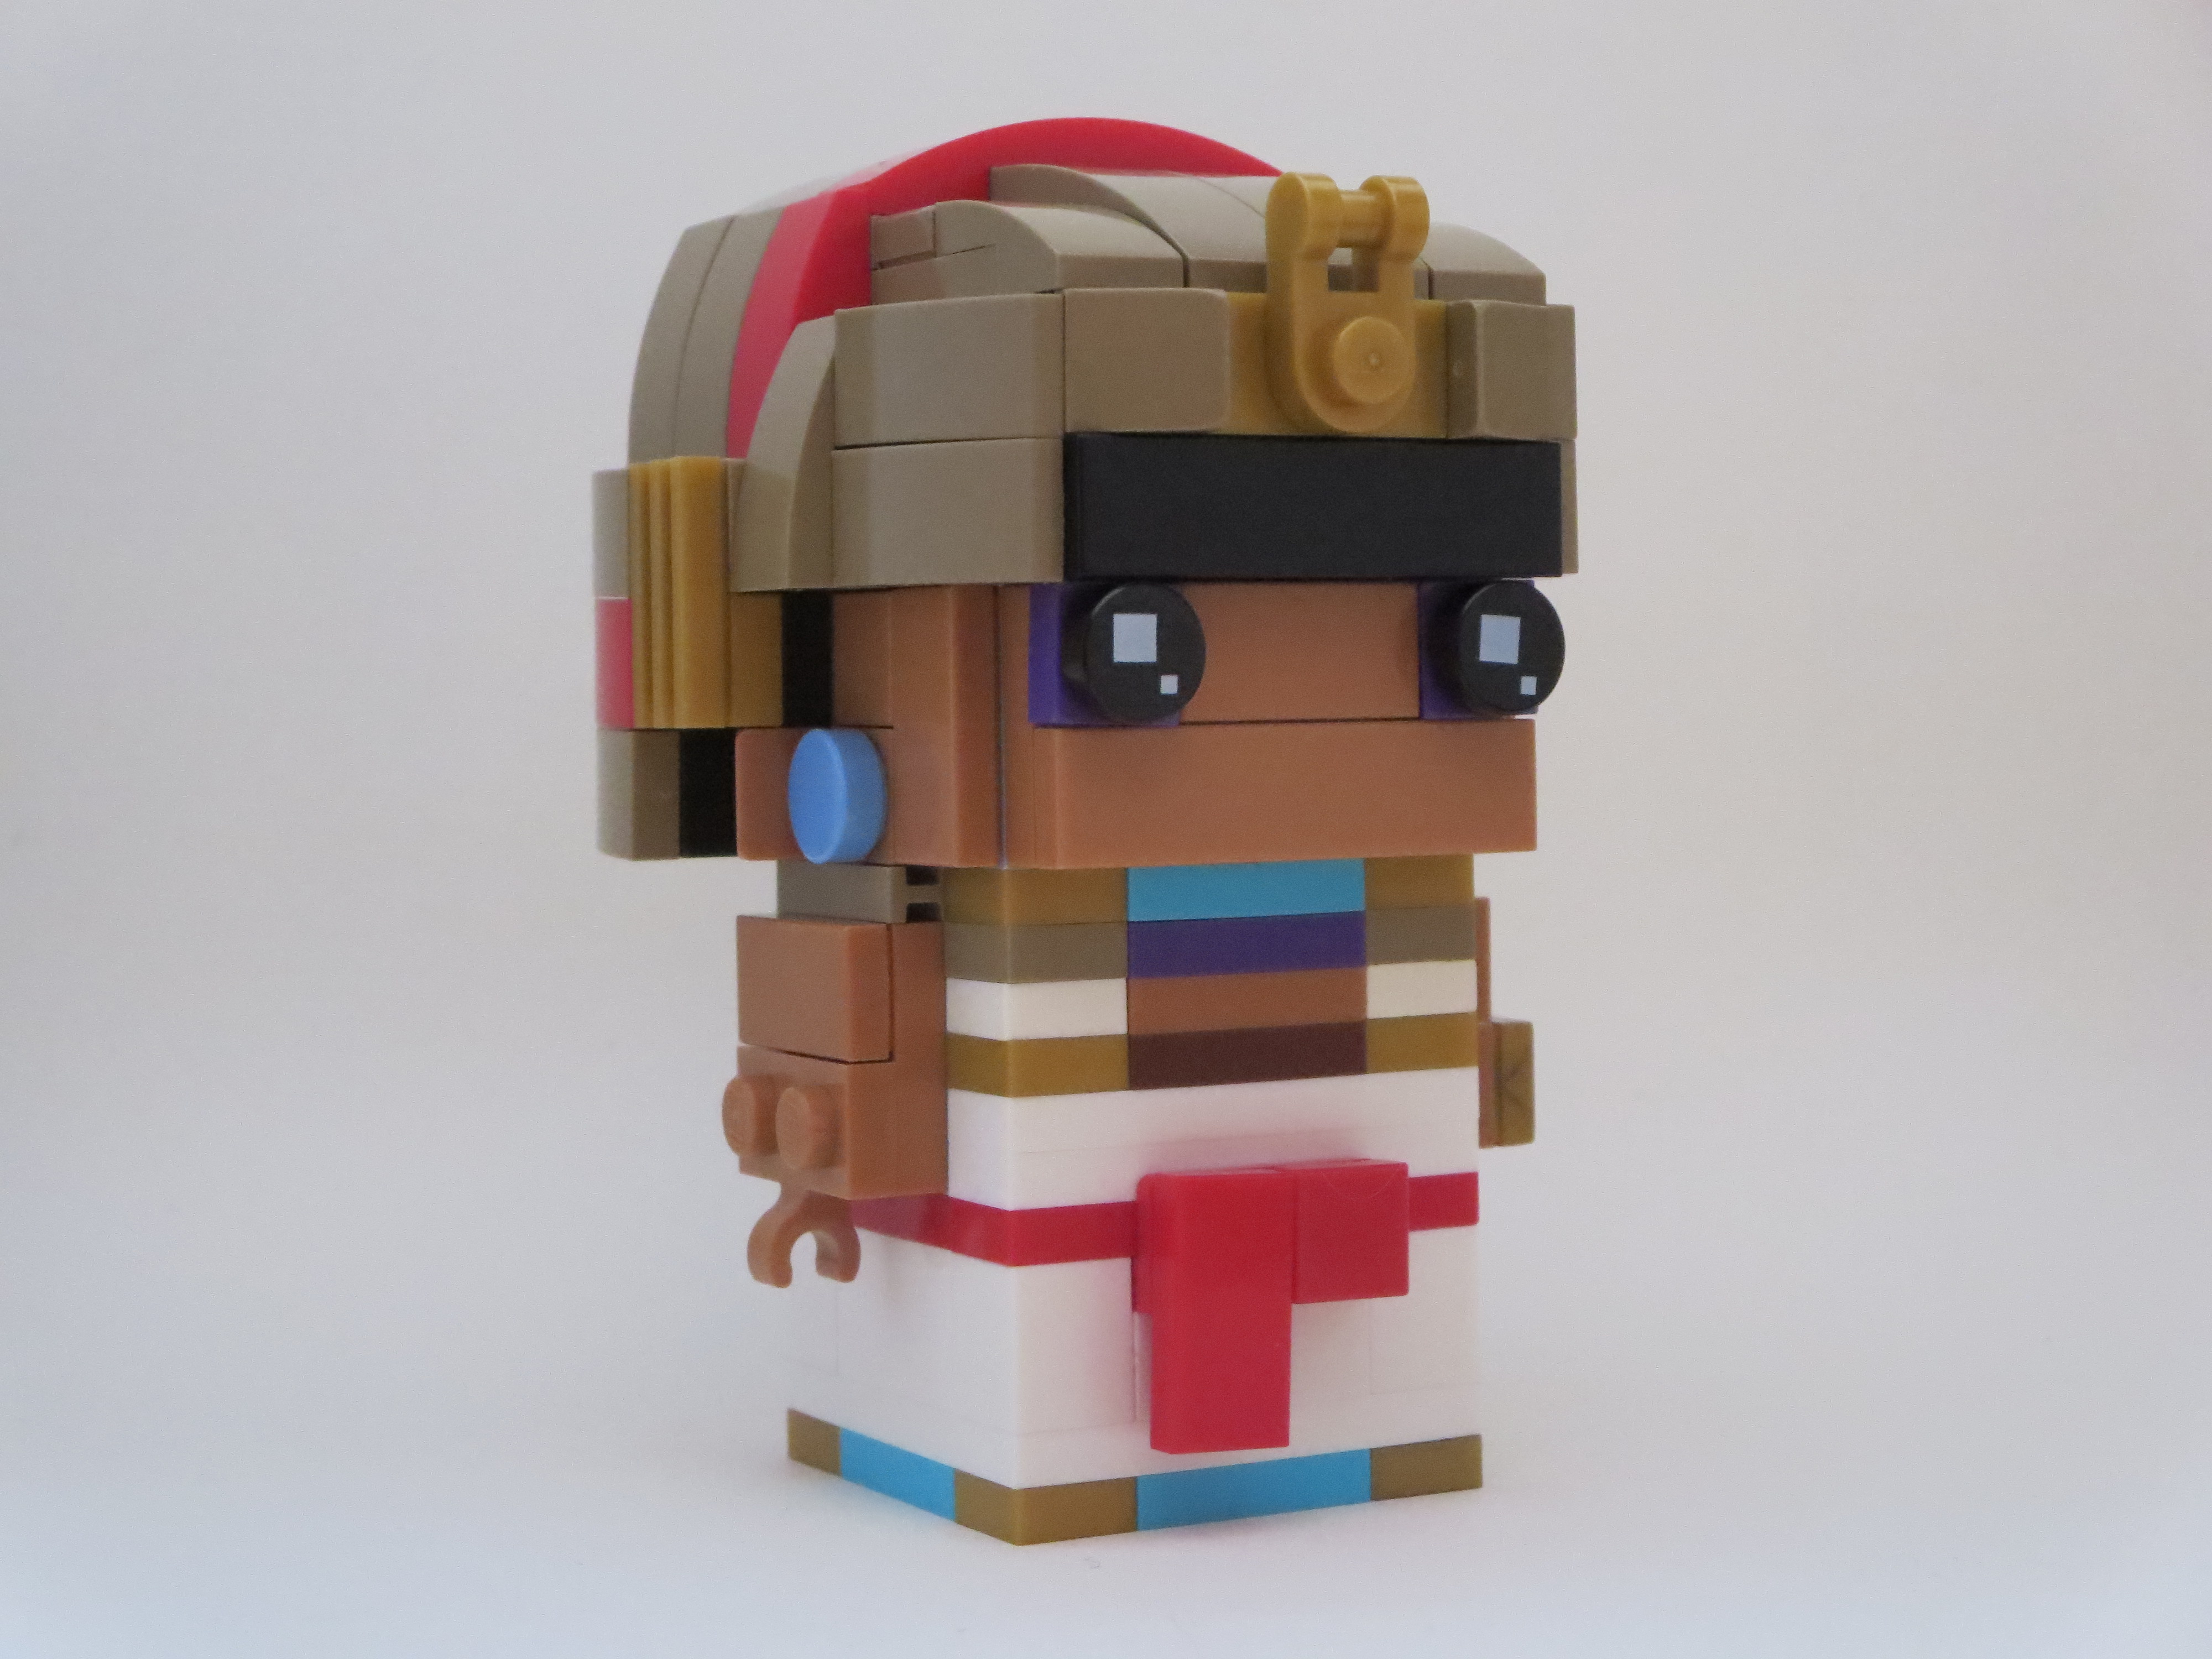 Cleopatra in Lego Brickheadz form (MOC) | CivFanatics Forums